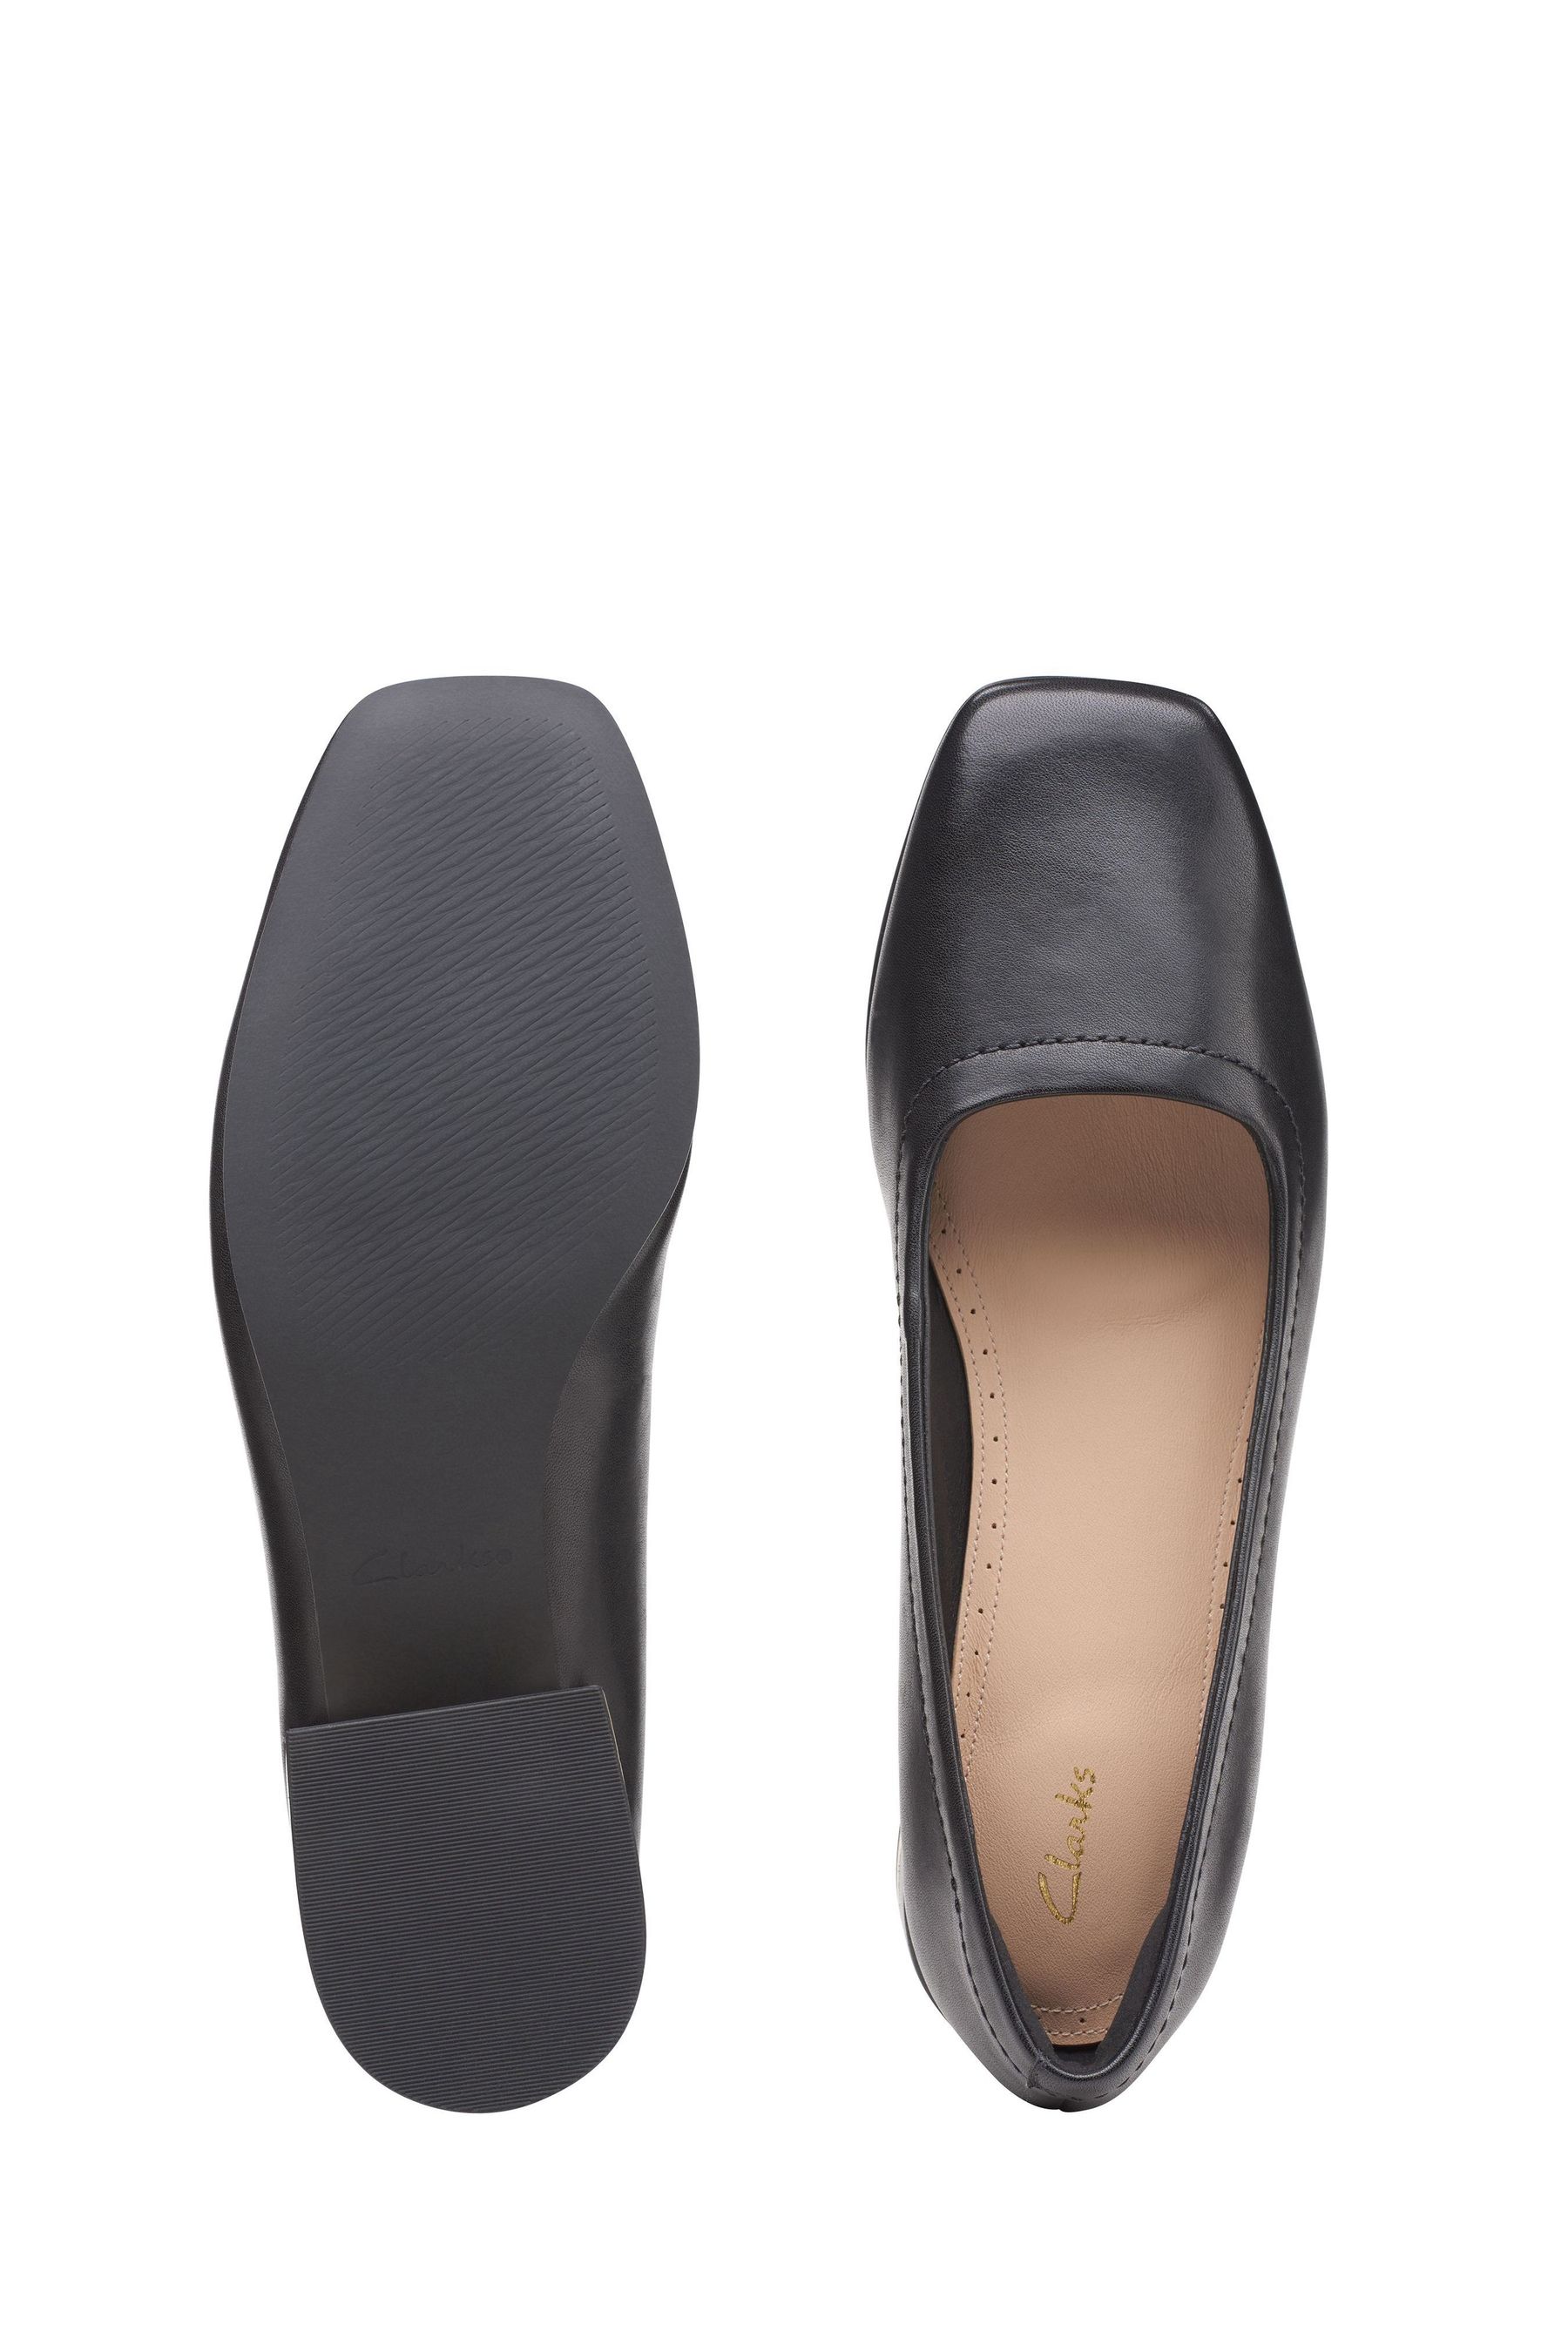 Buy Clarks Black Seren 30 Court Shoes from the Next UK online shop